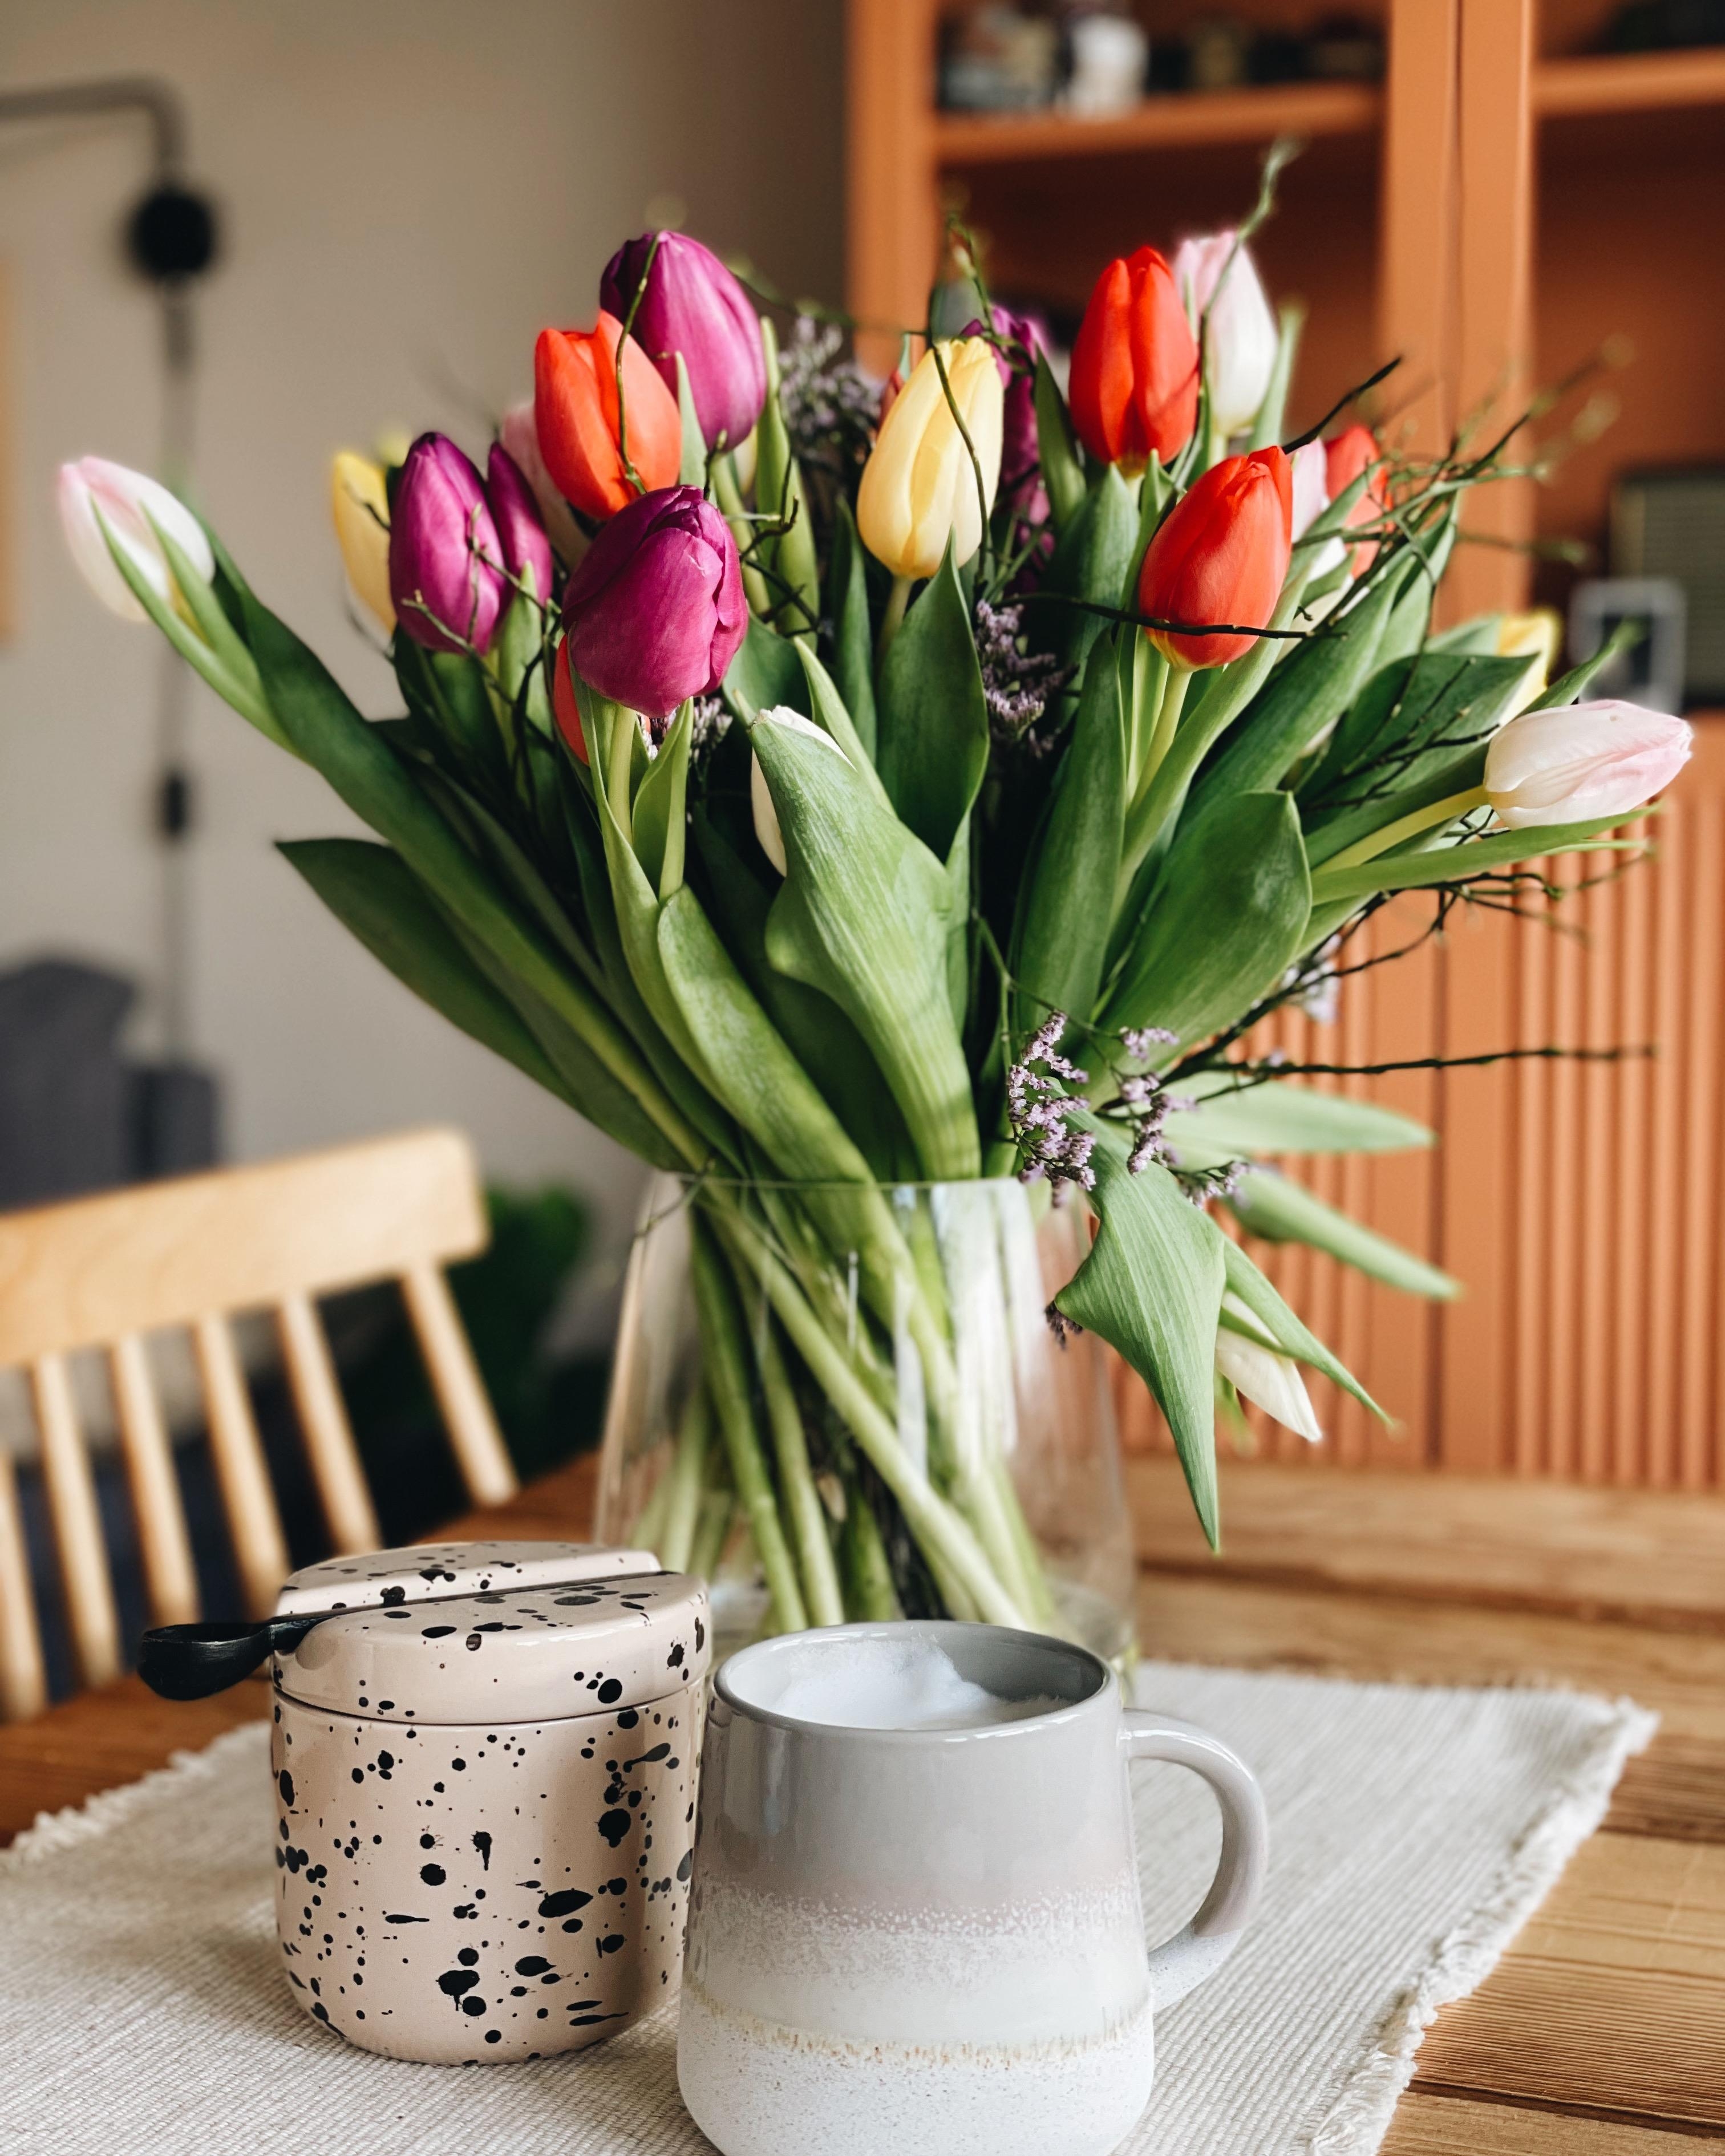 Flowerpower #freshflowers #tulips #frühlingsgefühle #home #details #livingroom #inspiration #couchliebt 